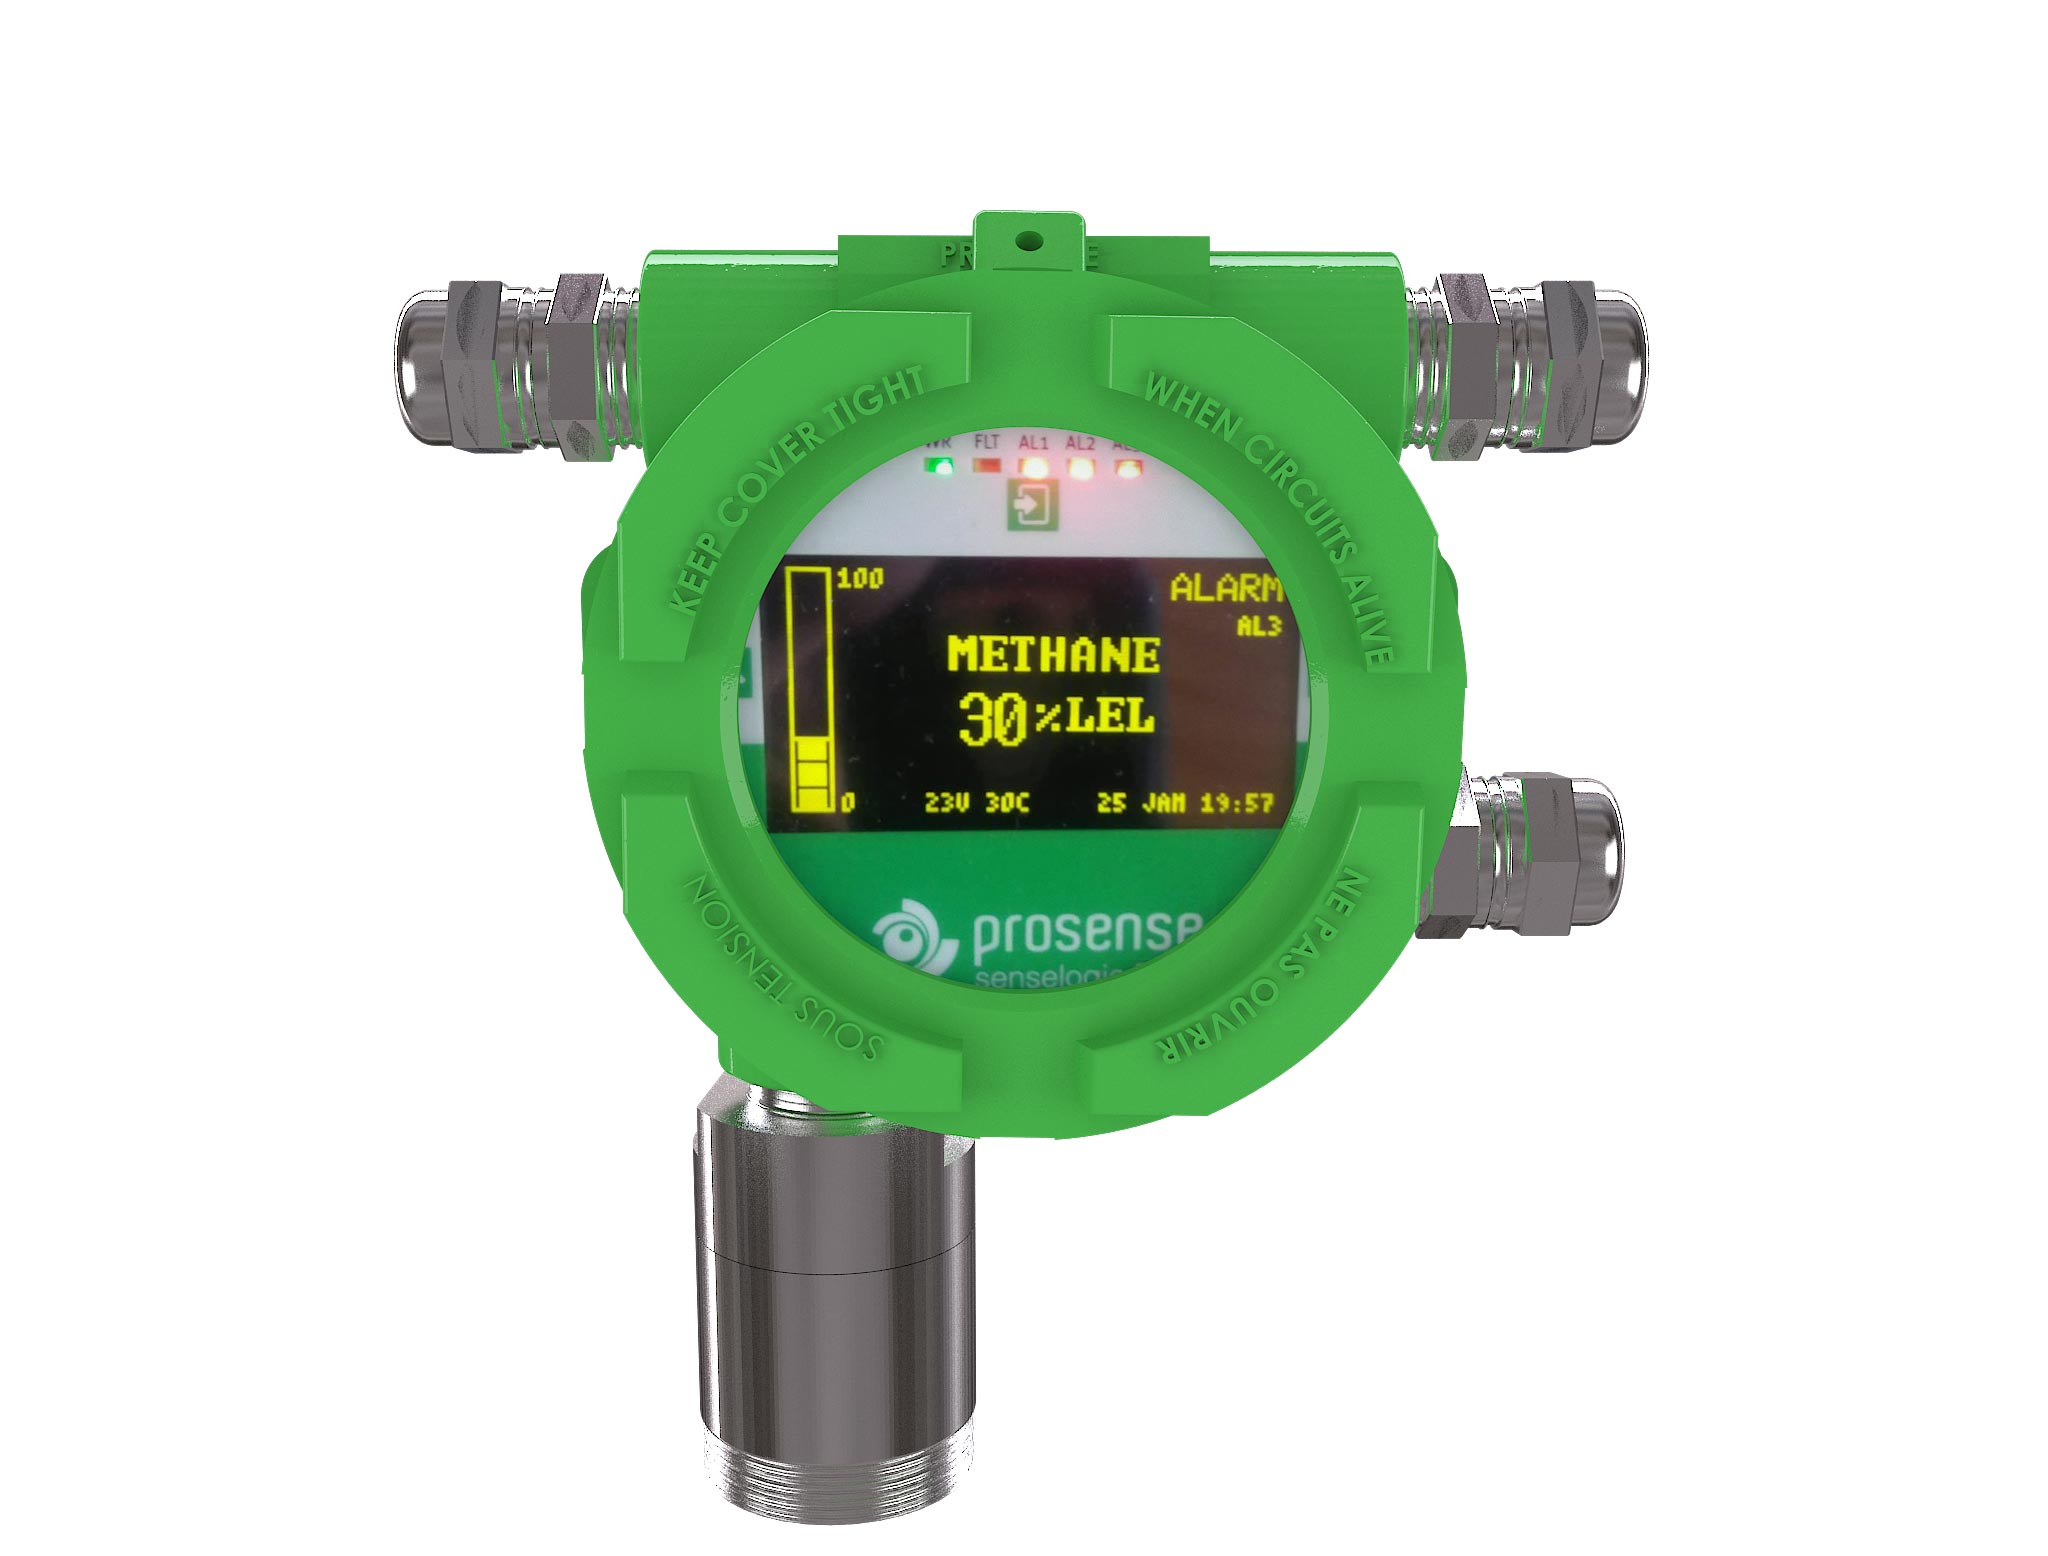 PQD-6634 Sulfur Dioxide Gas Detector